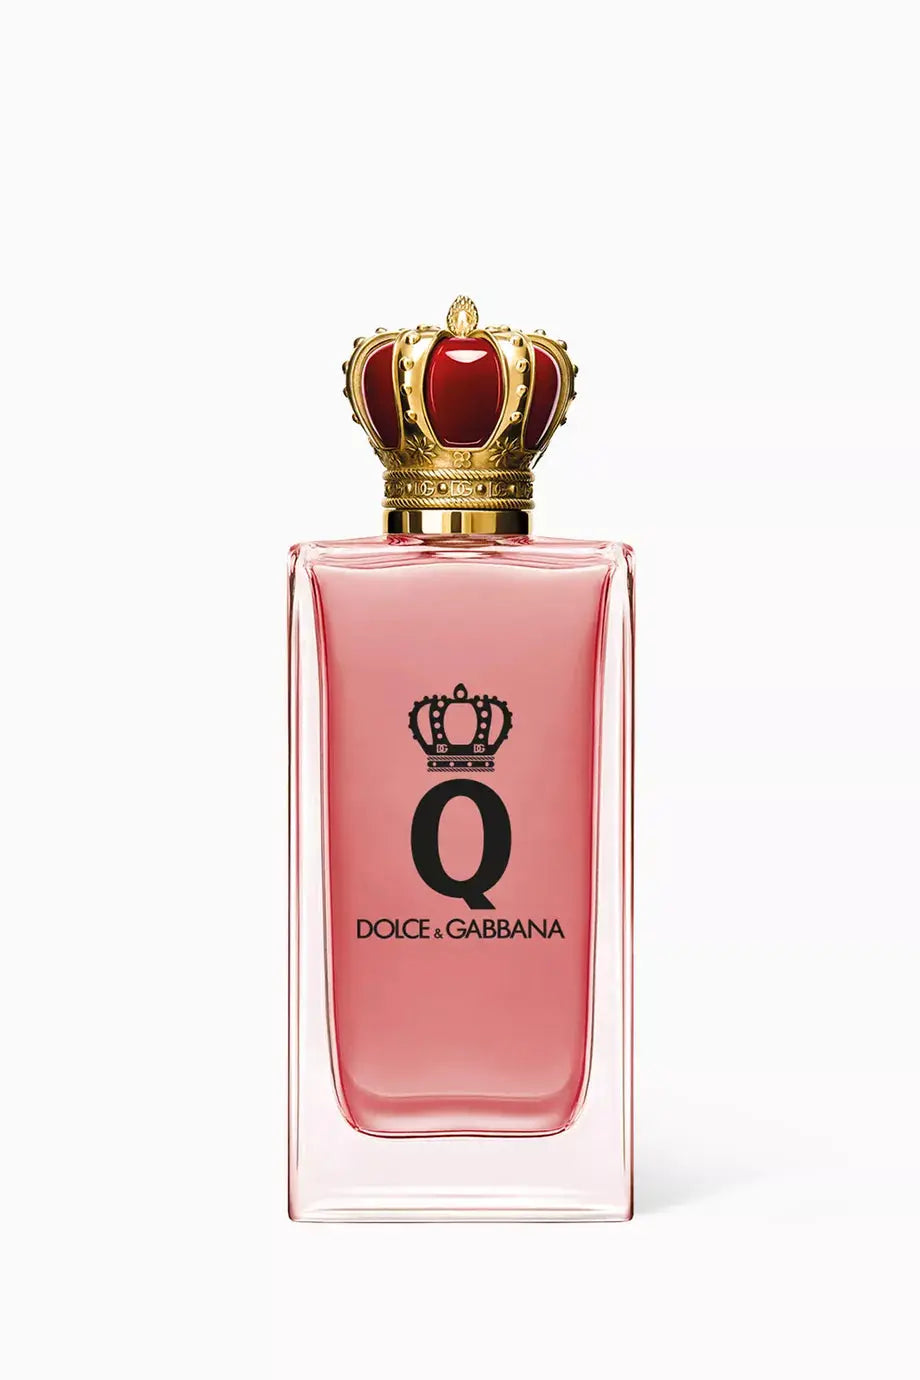 Q by Dolce&Gabbana Eau de Parfum Intense For Women